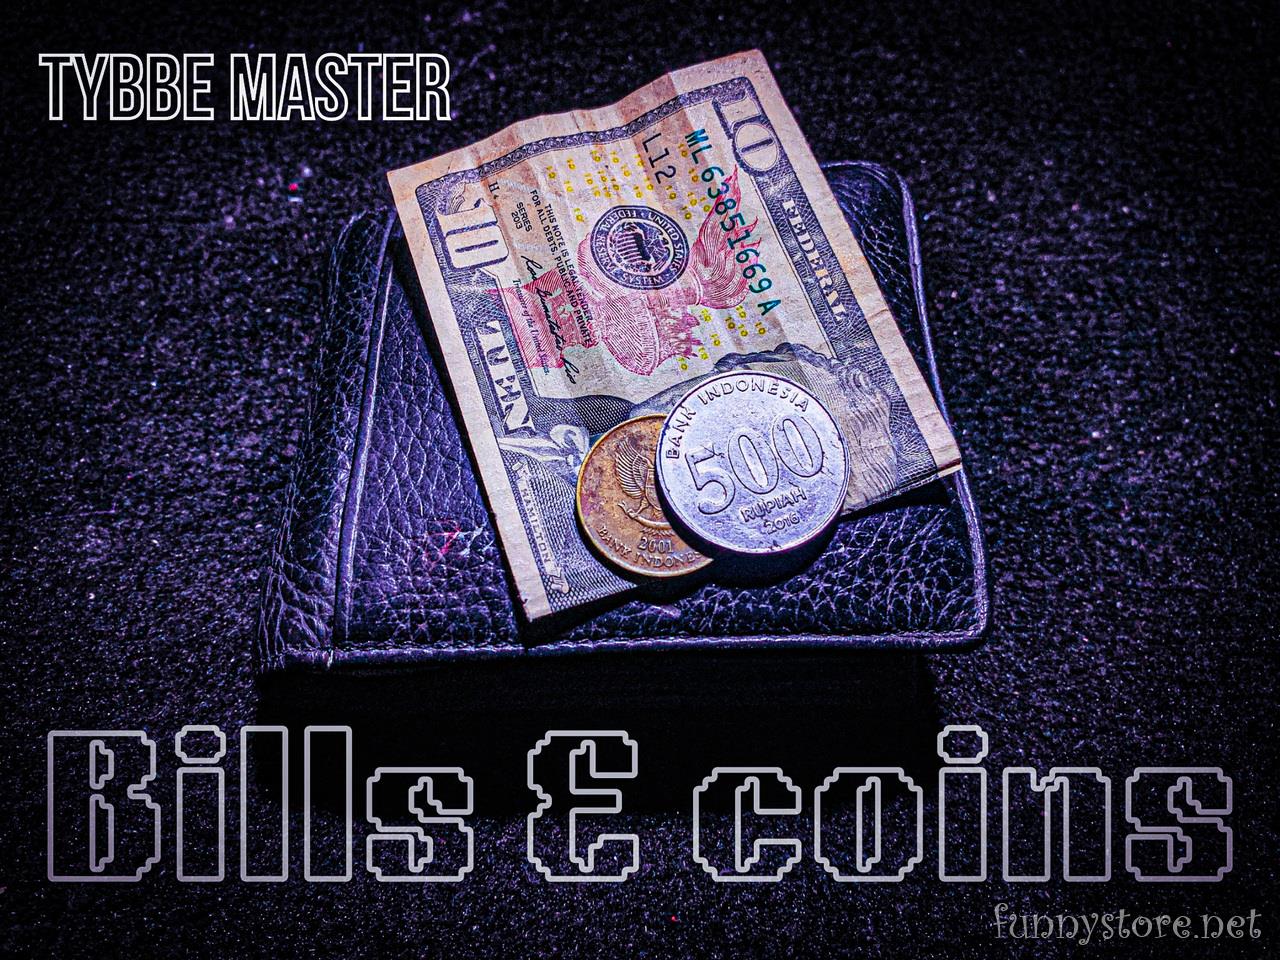 Tybbe master - Bills & coins